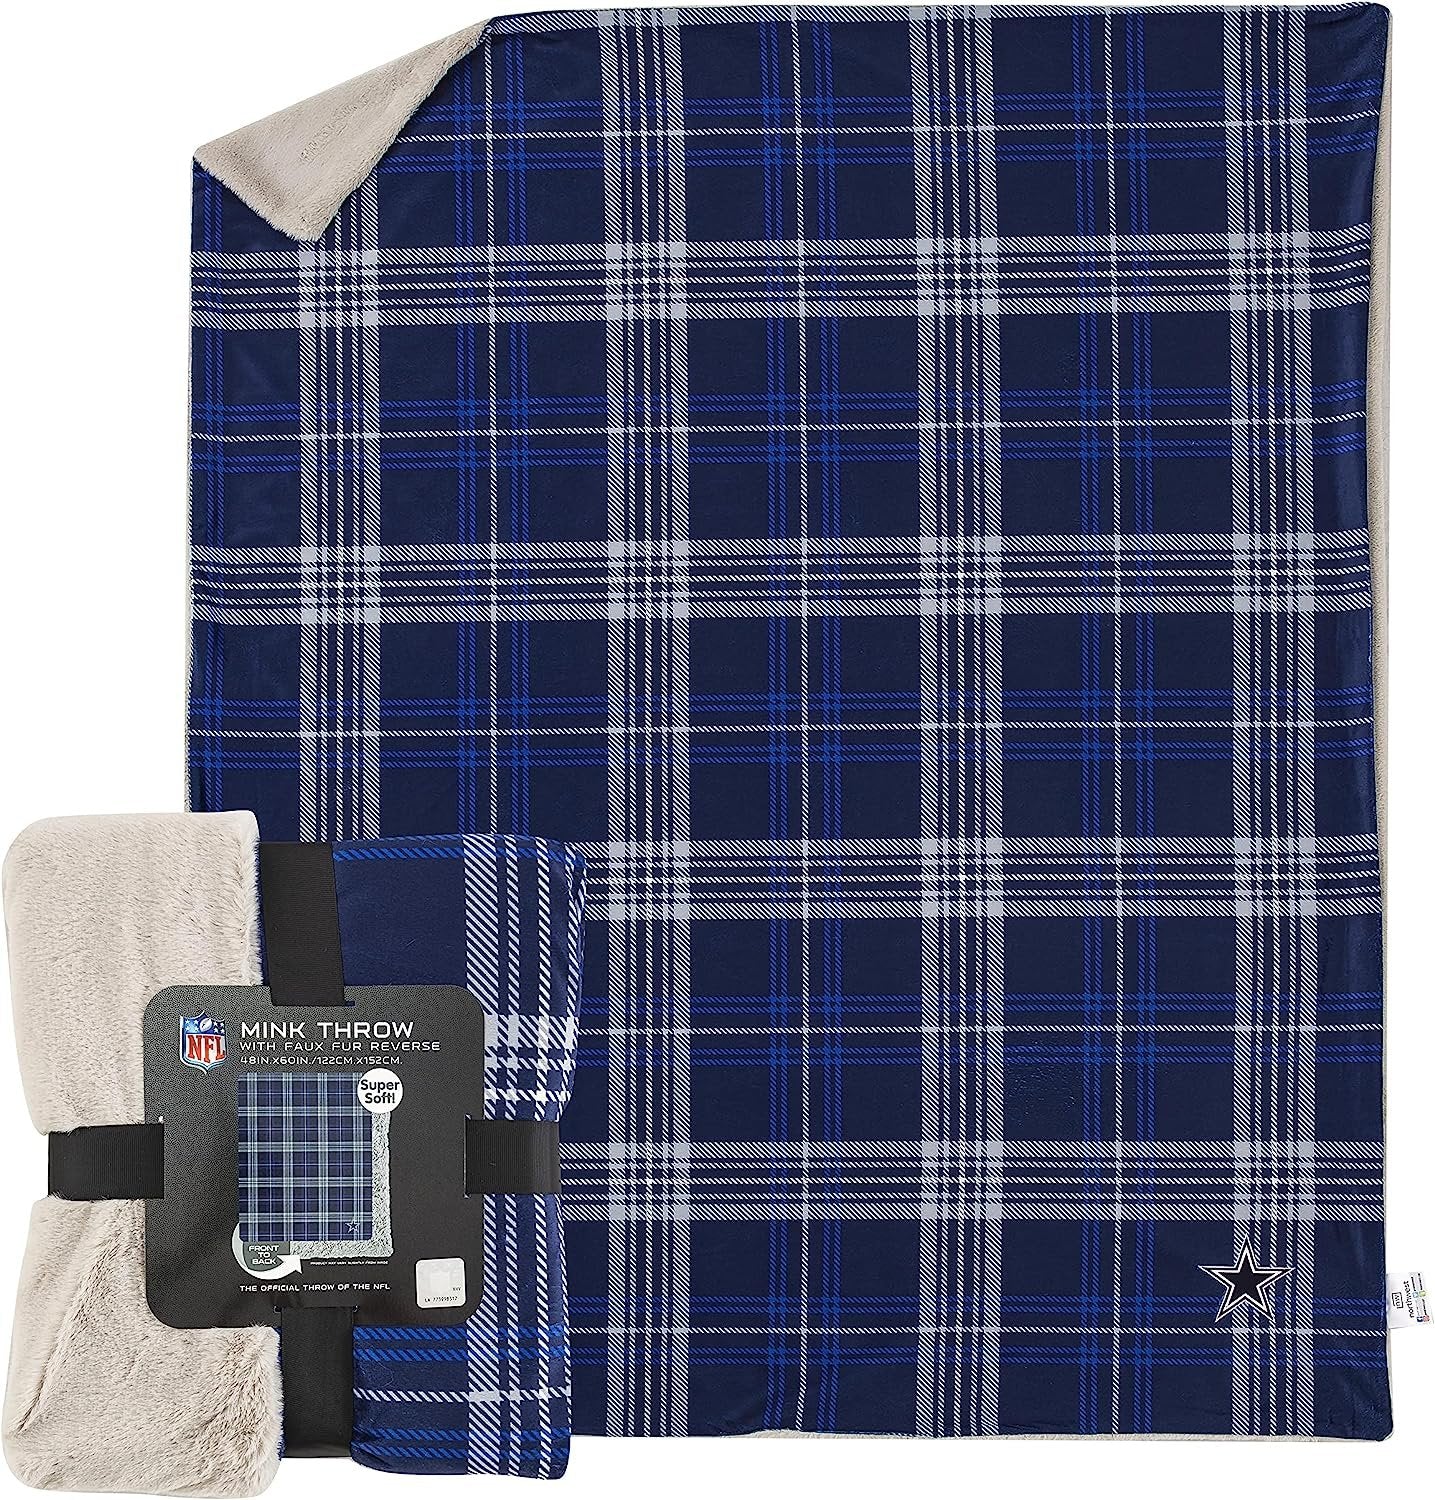 Dallas Cowboys Throw Blanket, Micro Mink Plush Fleece with Faux Fur Reverse, 48x60 Inch